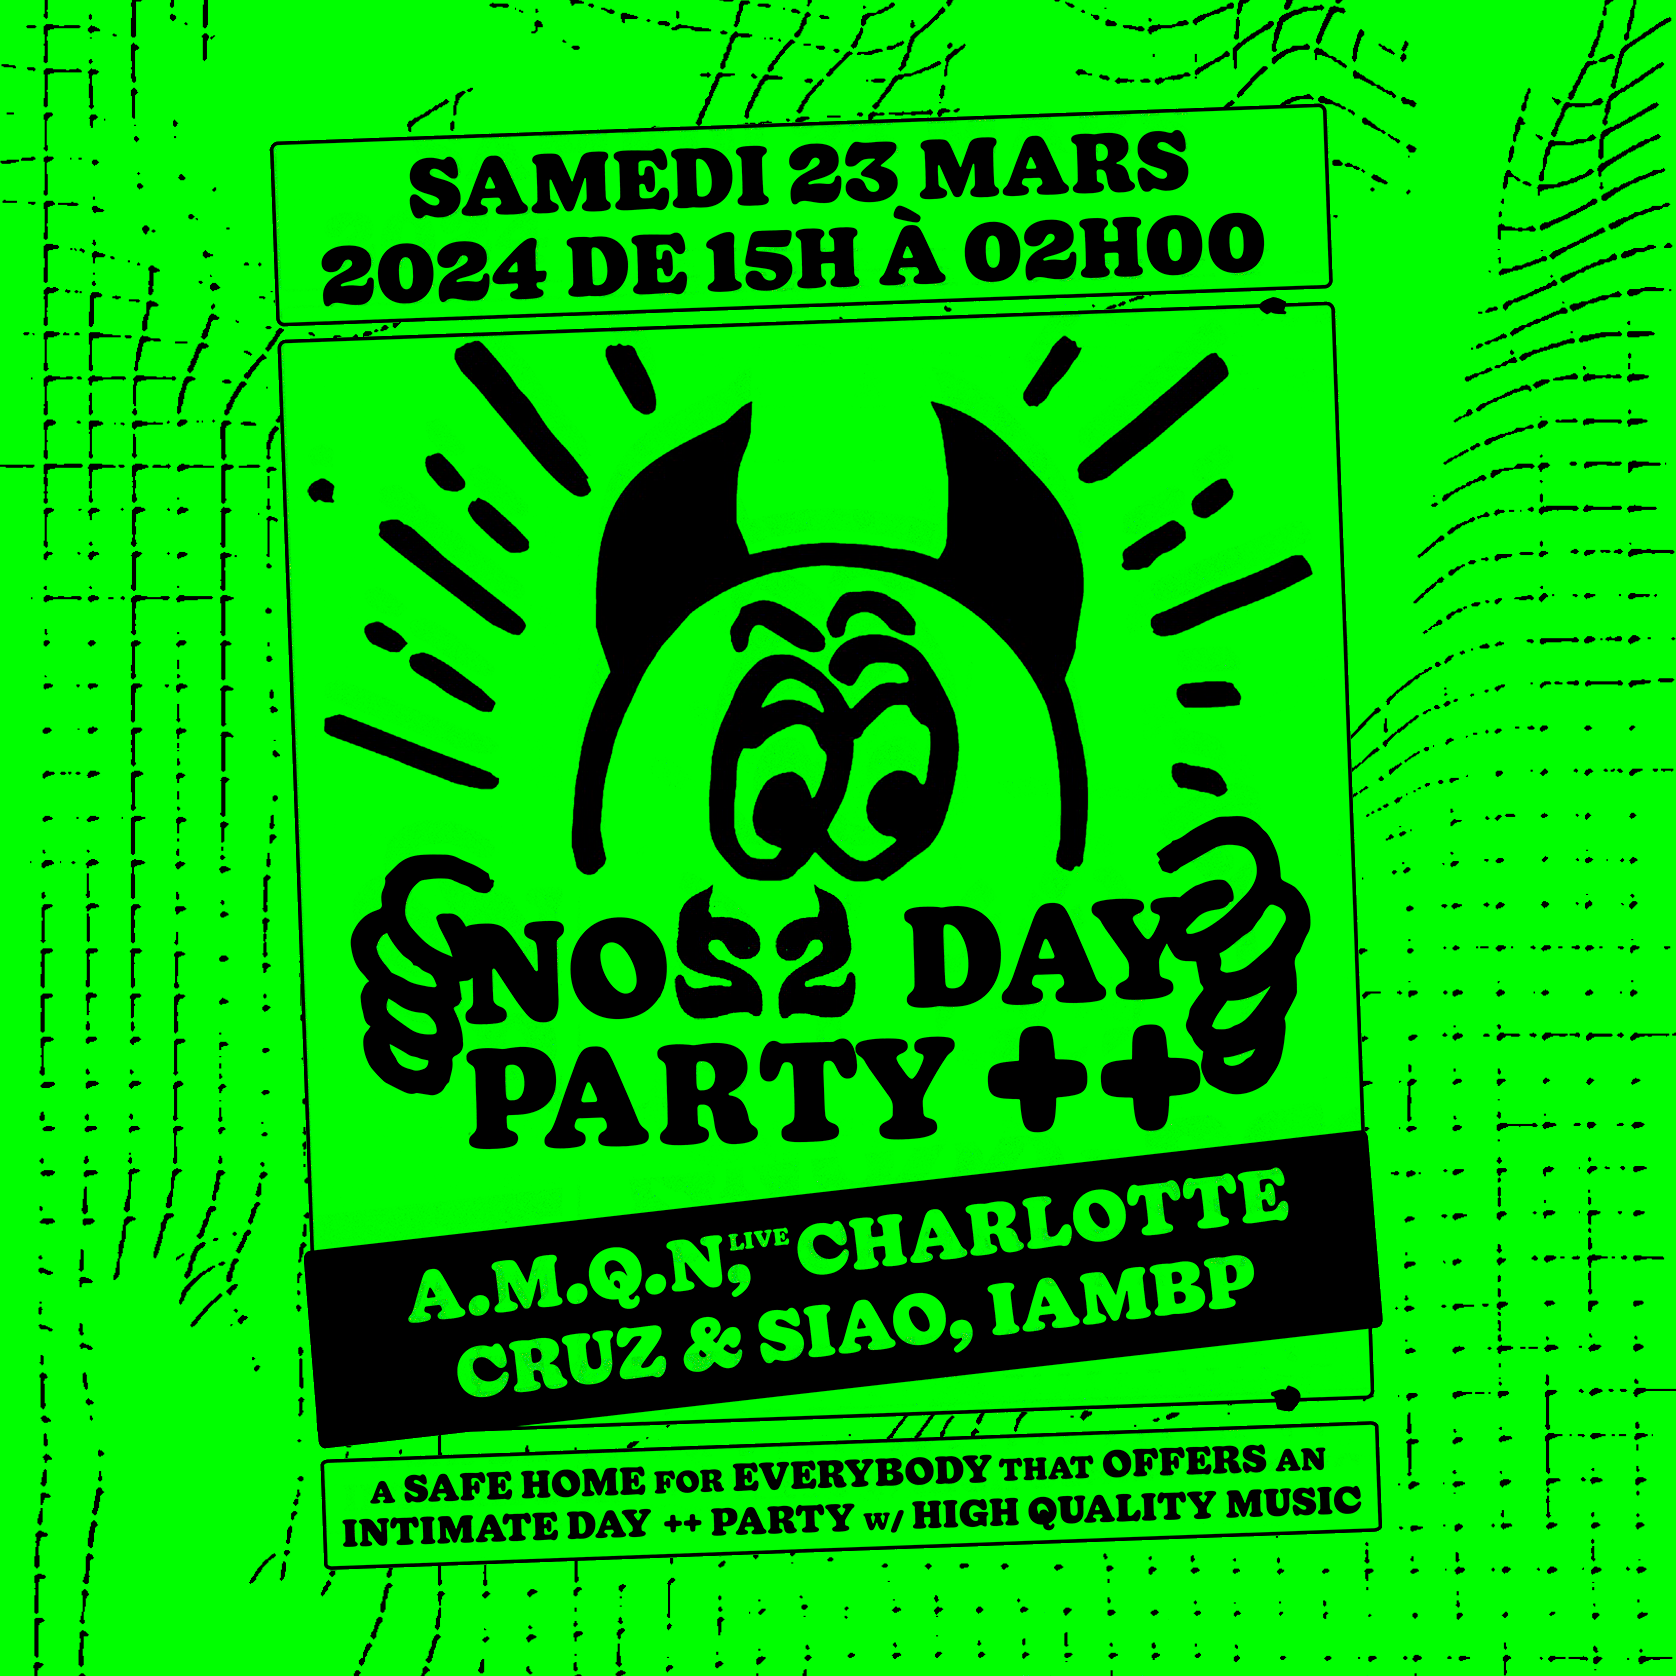 Nodd Day+ Party: AMQN live, Charlotte, Cruz & Saio, IAMBP - Página frontal